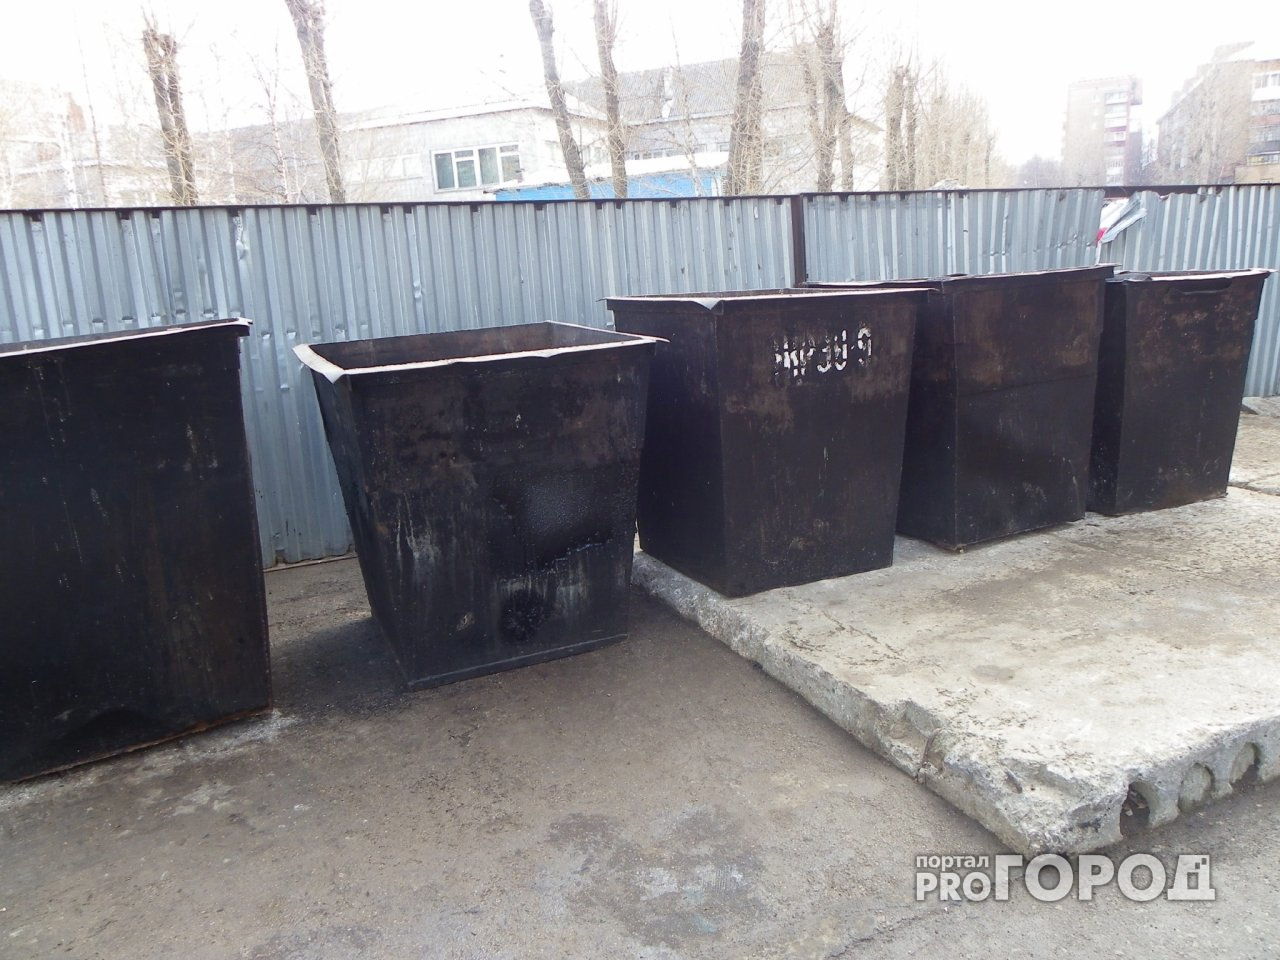 Корпус от гранатомета найден в мусорке возле стадиона "Нижний Новгород"